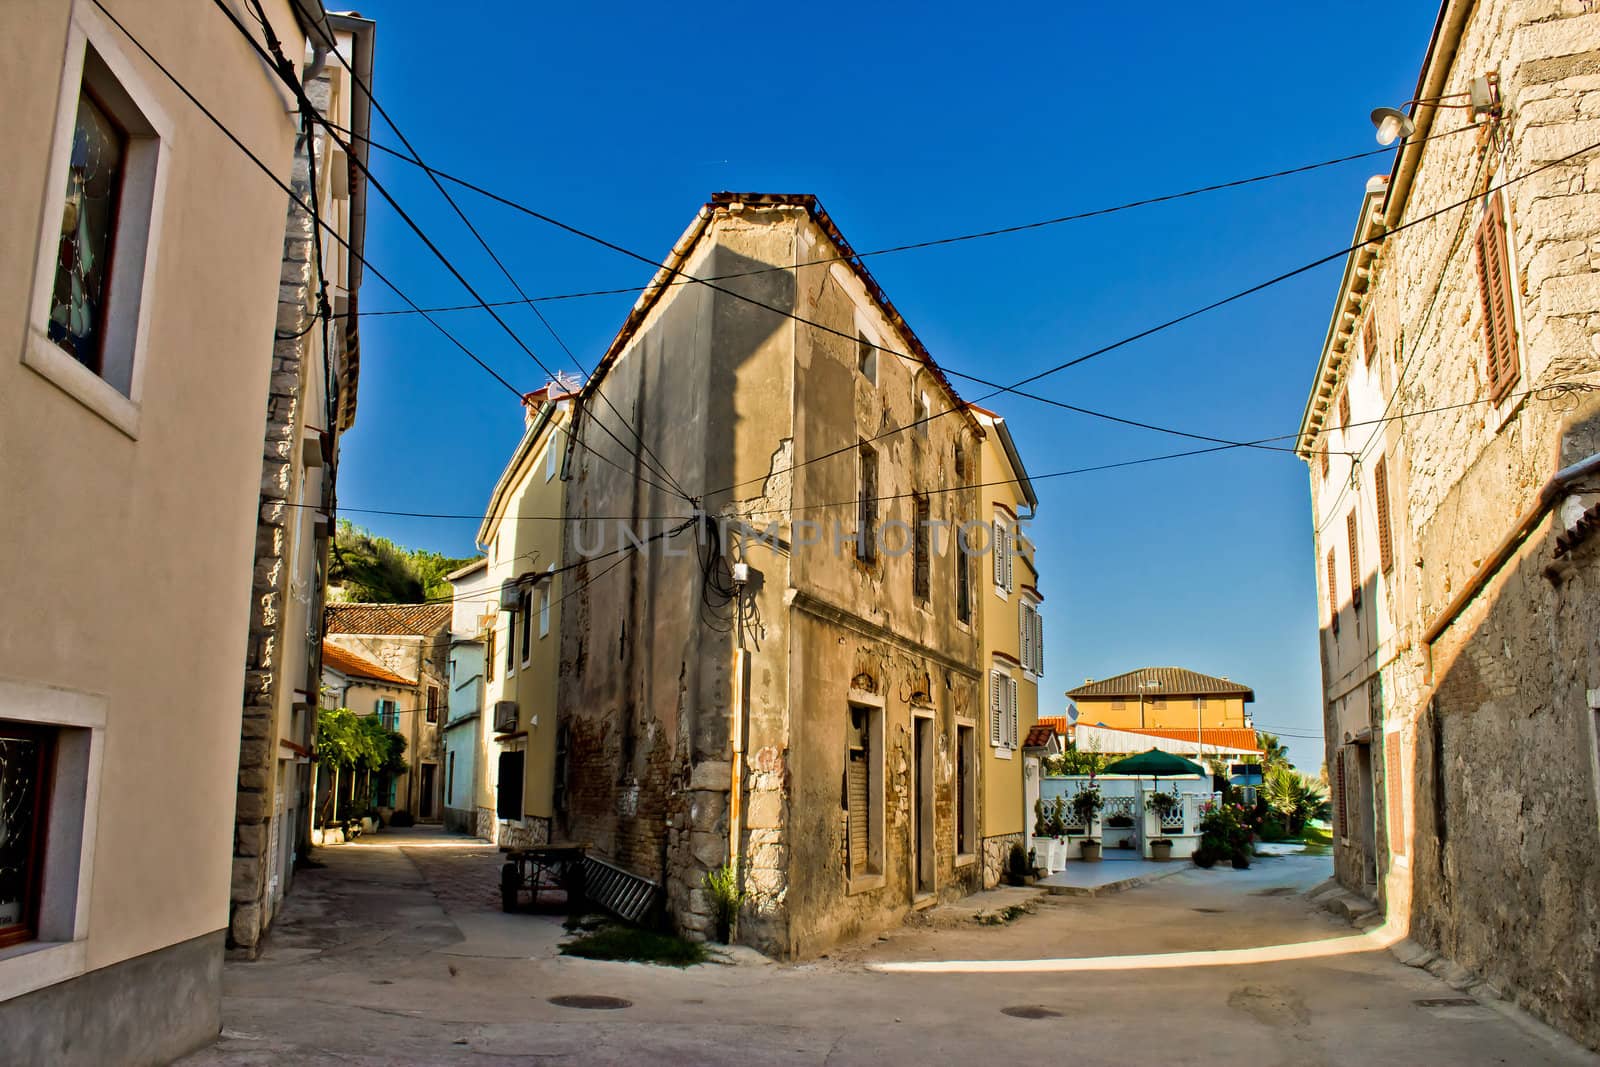 Narrow streets of Susak - traditional dalmatian architecture, Croatia